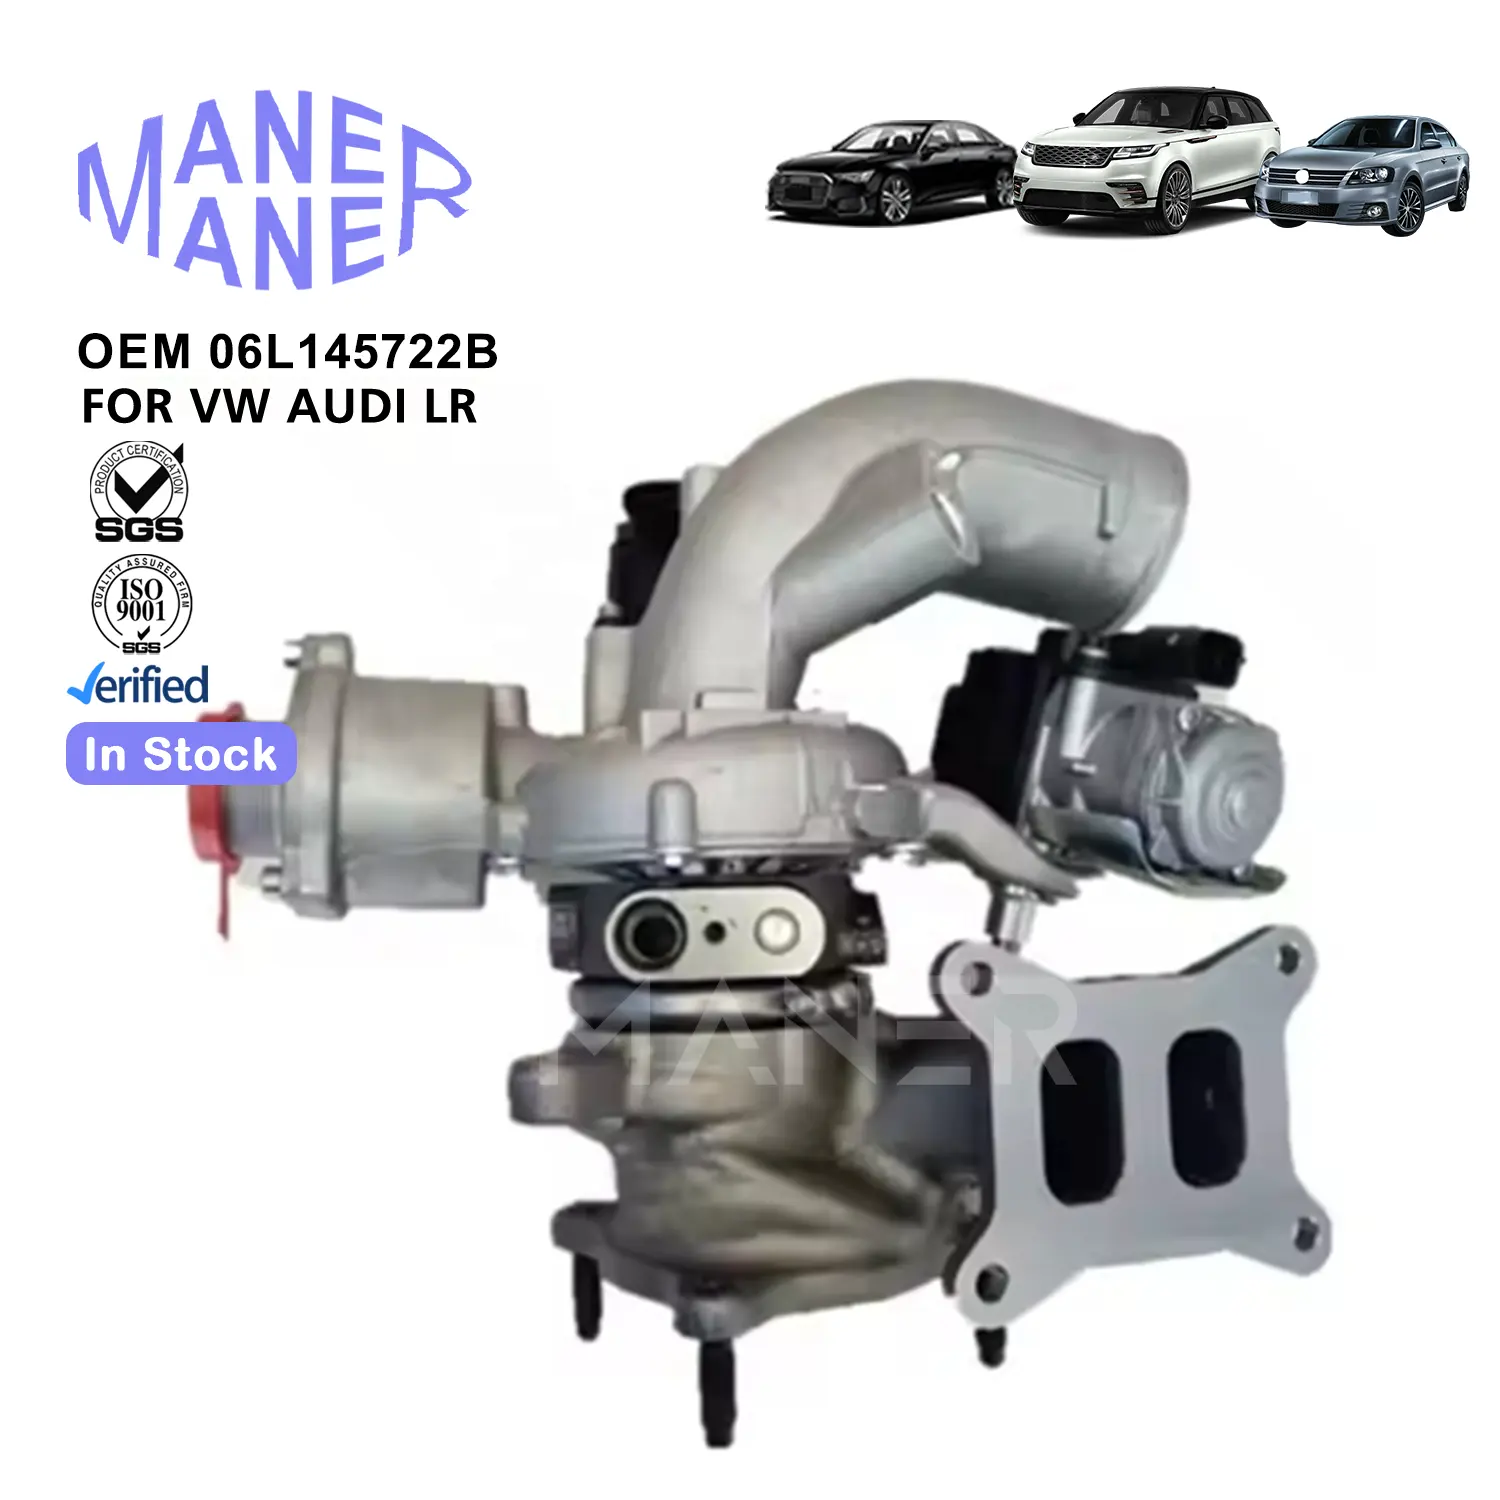 MANER sistem mesin otomatis Systems manufacture produsen turbocharger buatan dengan baik untuk Audi A4 A5 A6 C7 A7 Q5 2.0T